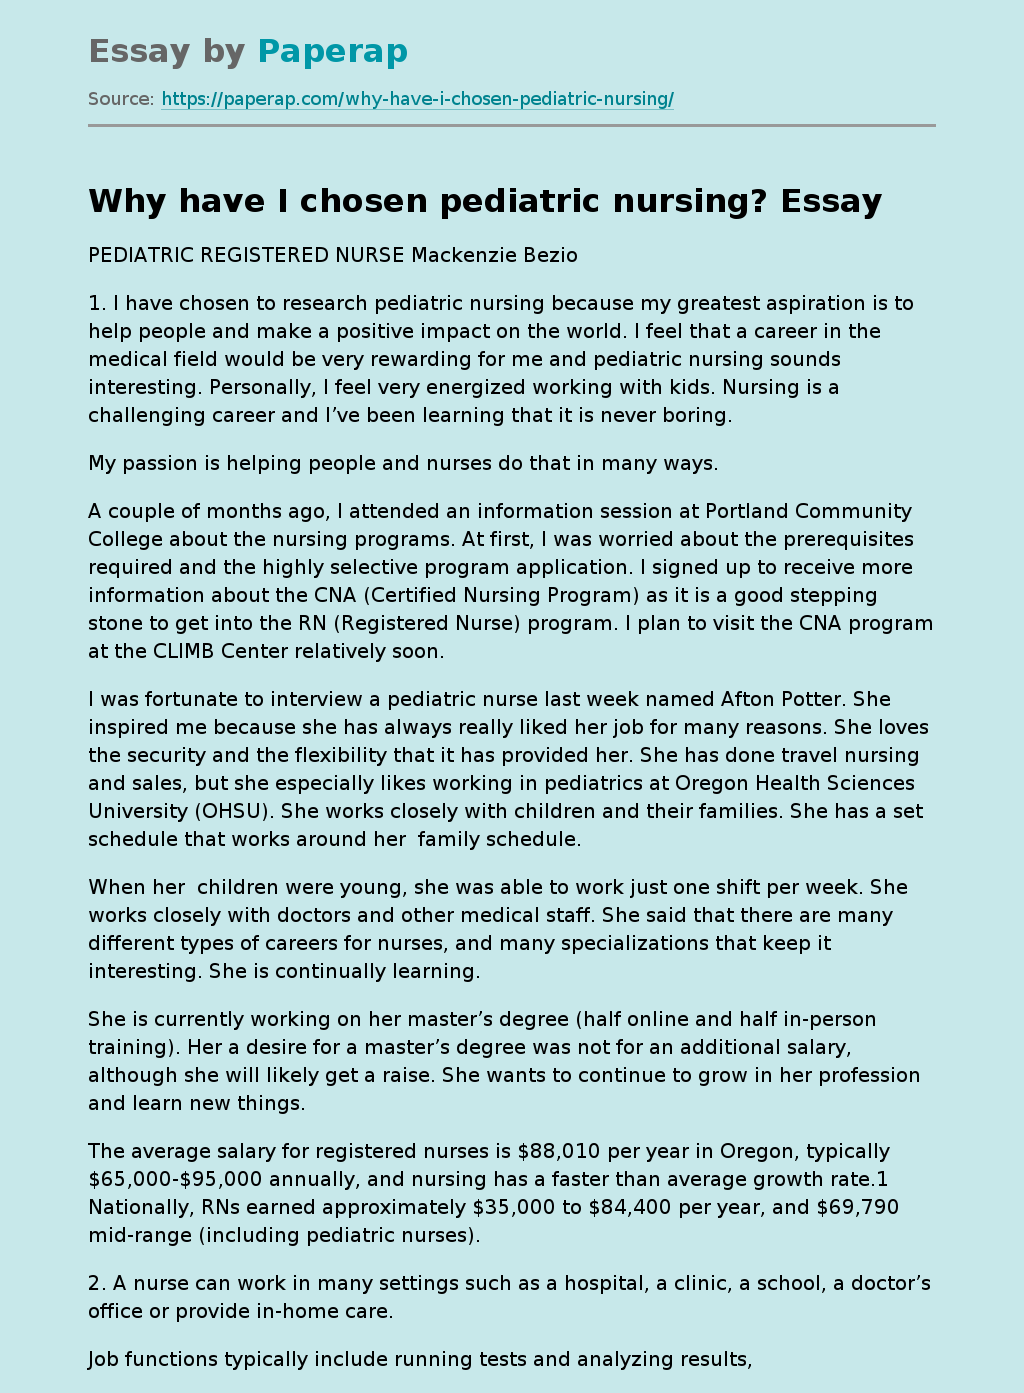 Why have I chosen pediatric nursing?